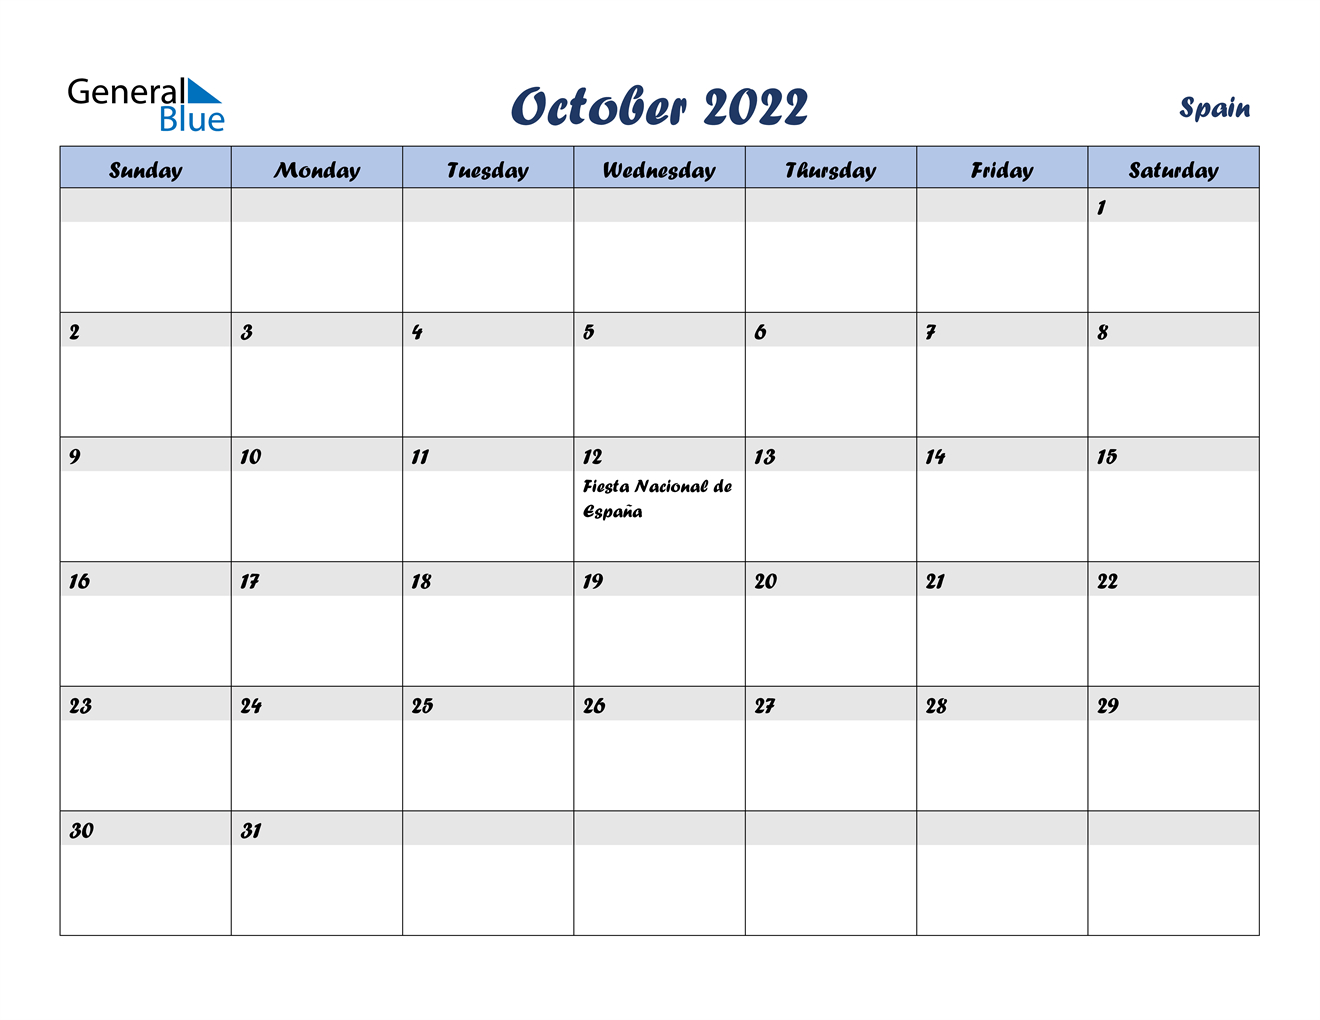 October 2022 Calendar - Spain